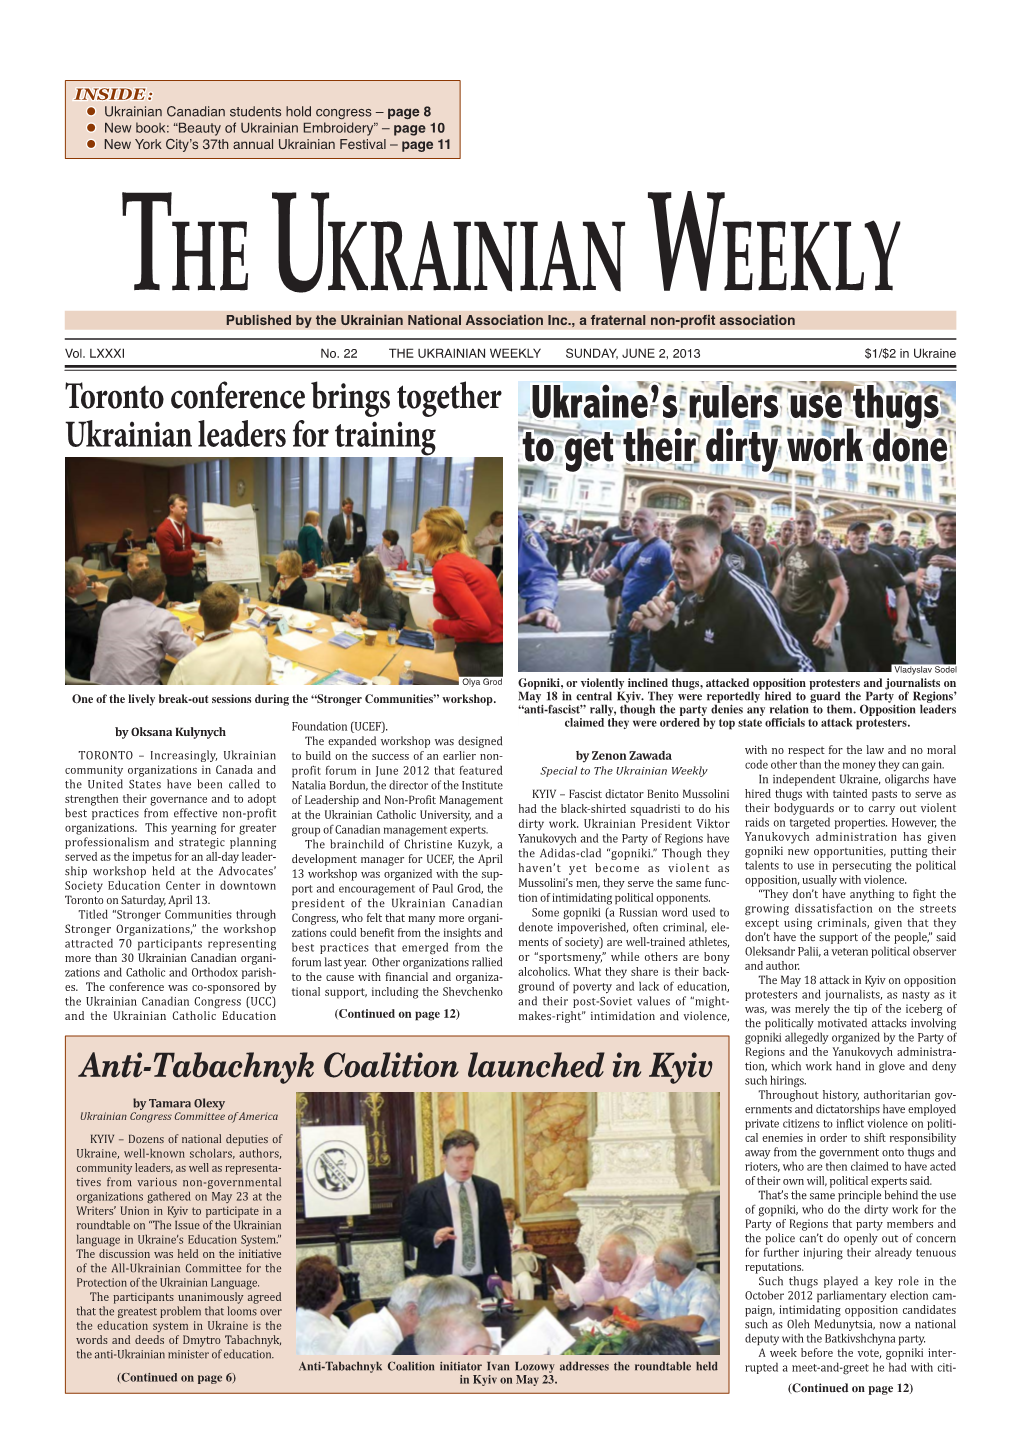 The Ukrainian Weekly 2013, No.22